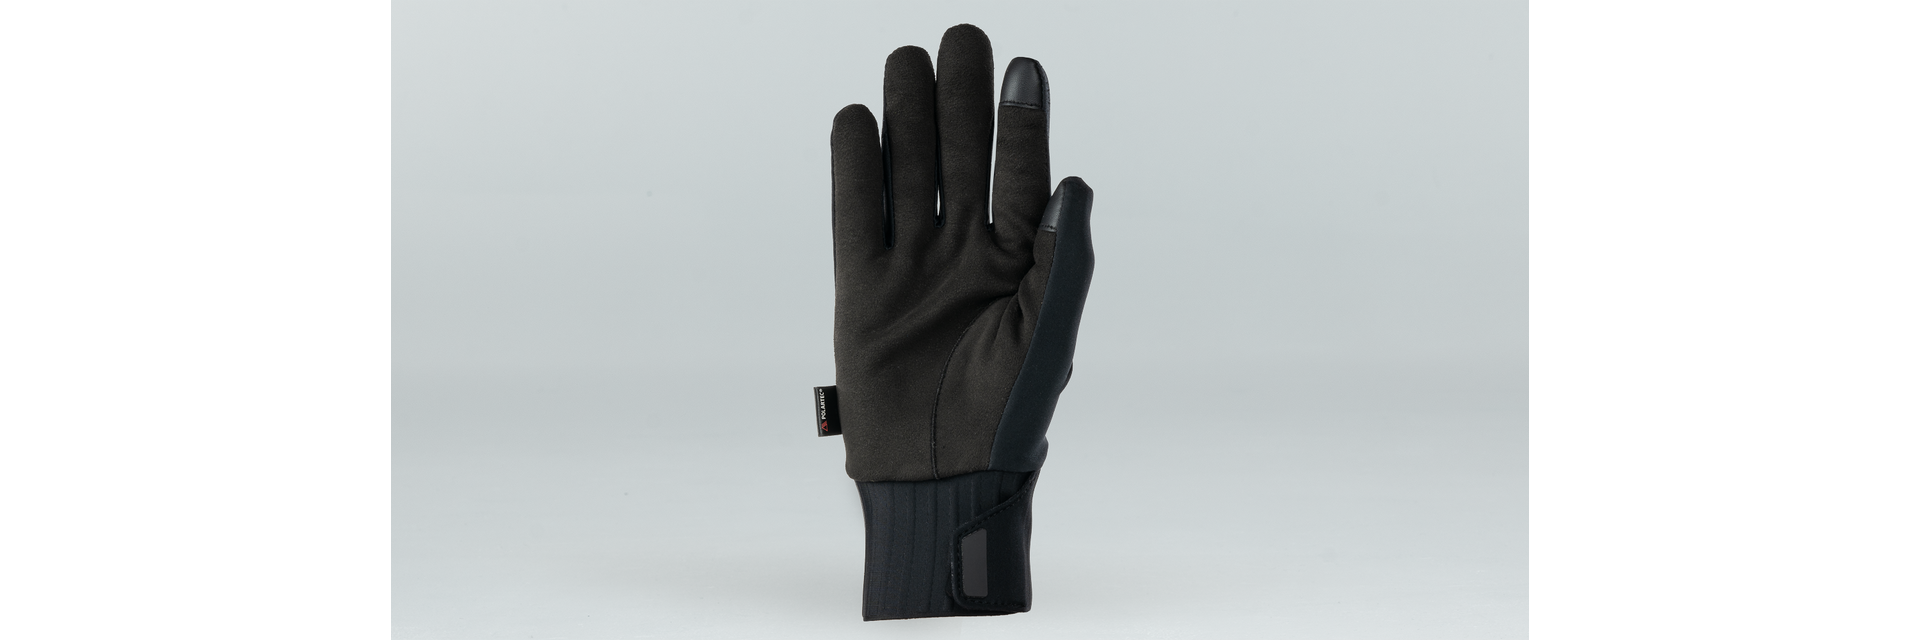 specialized guanti thermal uomo prime series - nero